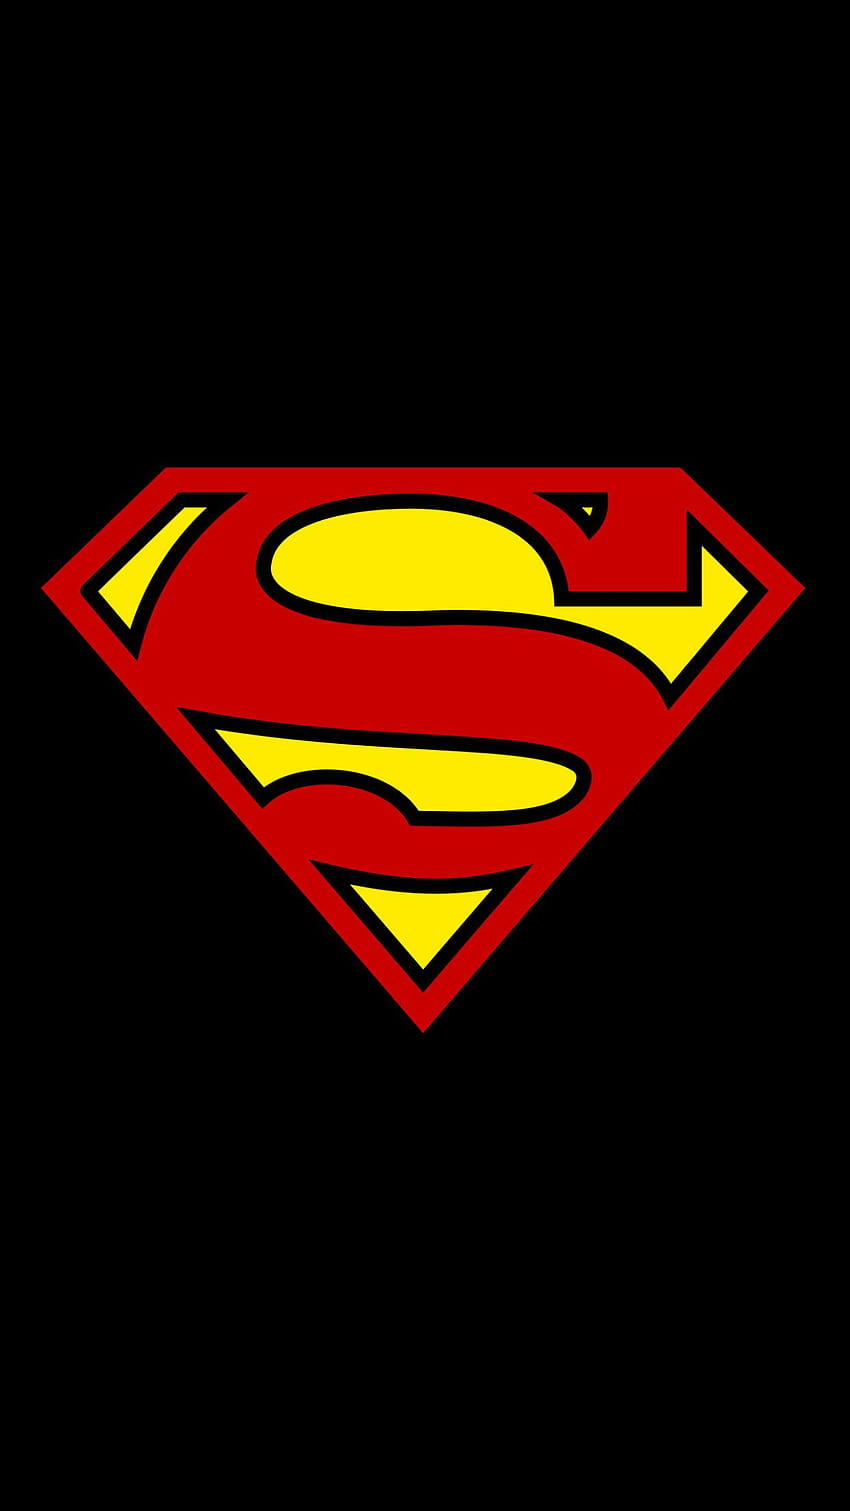 Free DC Comics Superman Batman Logo Desktop Wallpaper in 4K